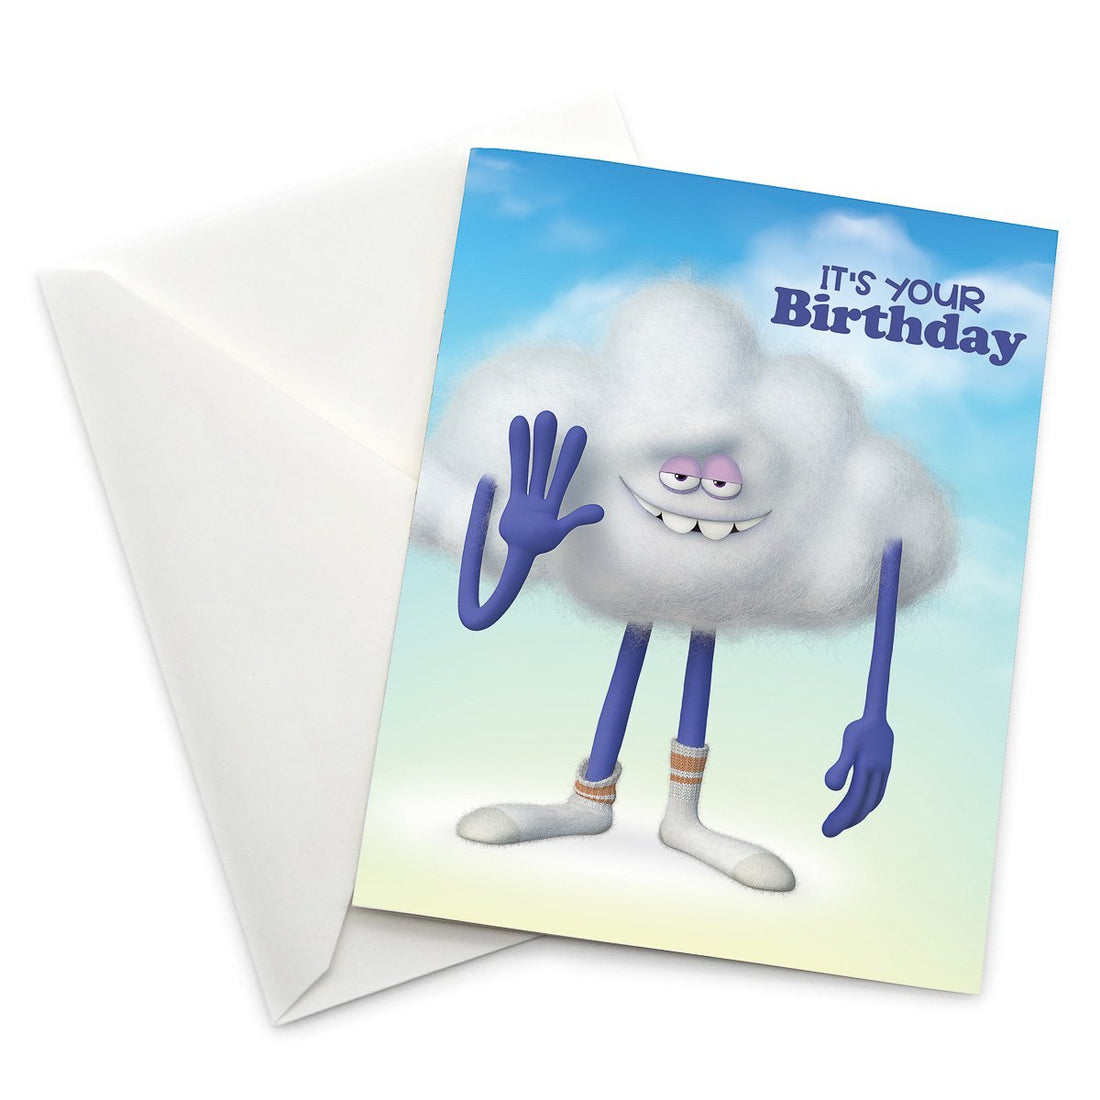 Trolls World Tour - Cloud Guy "It's Your Birthday" Card